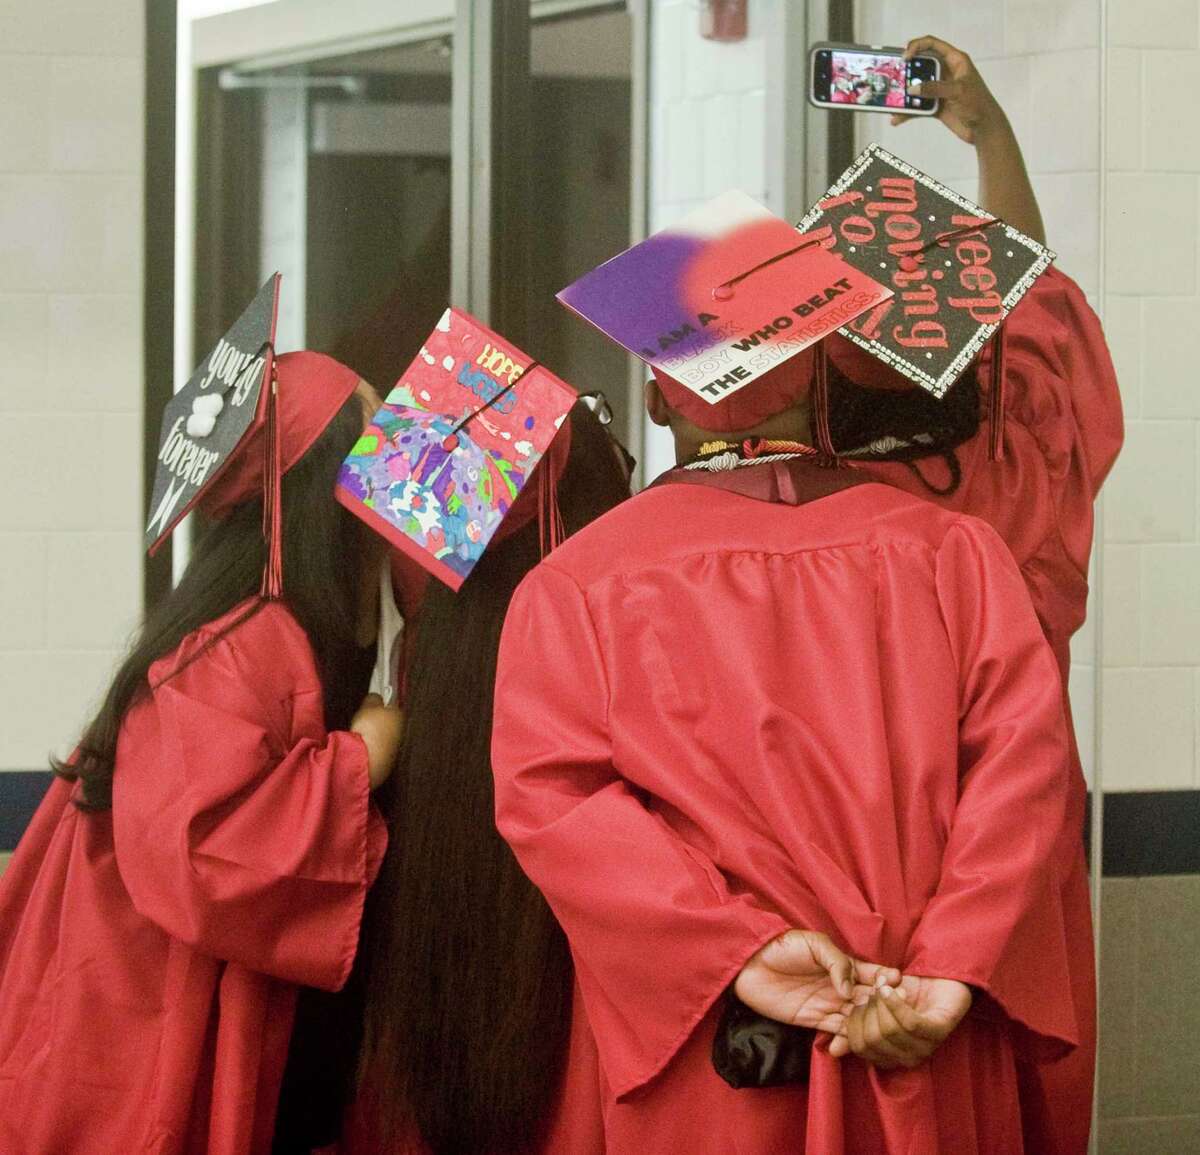 In Photos Wright Tech graduates awarded diplomas in Stamford